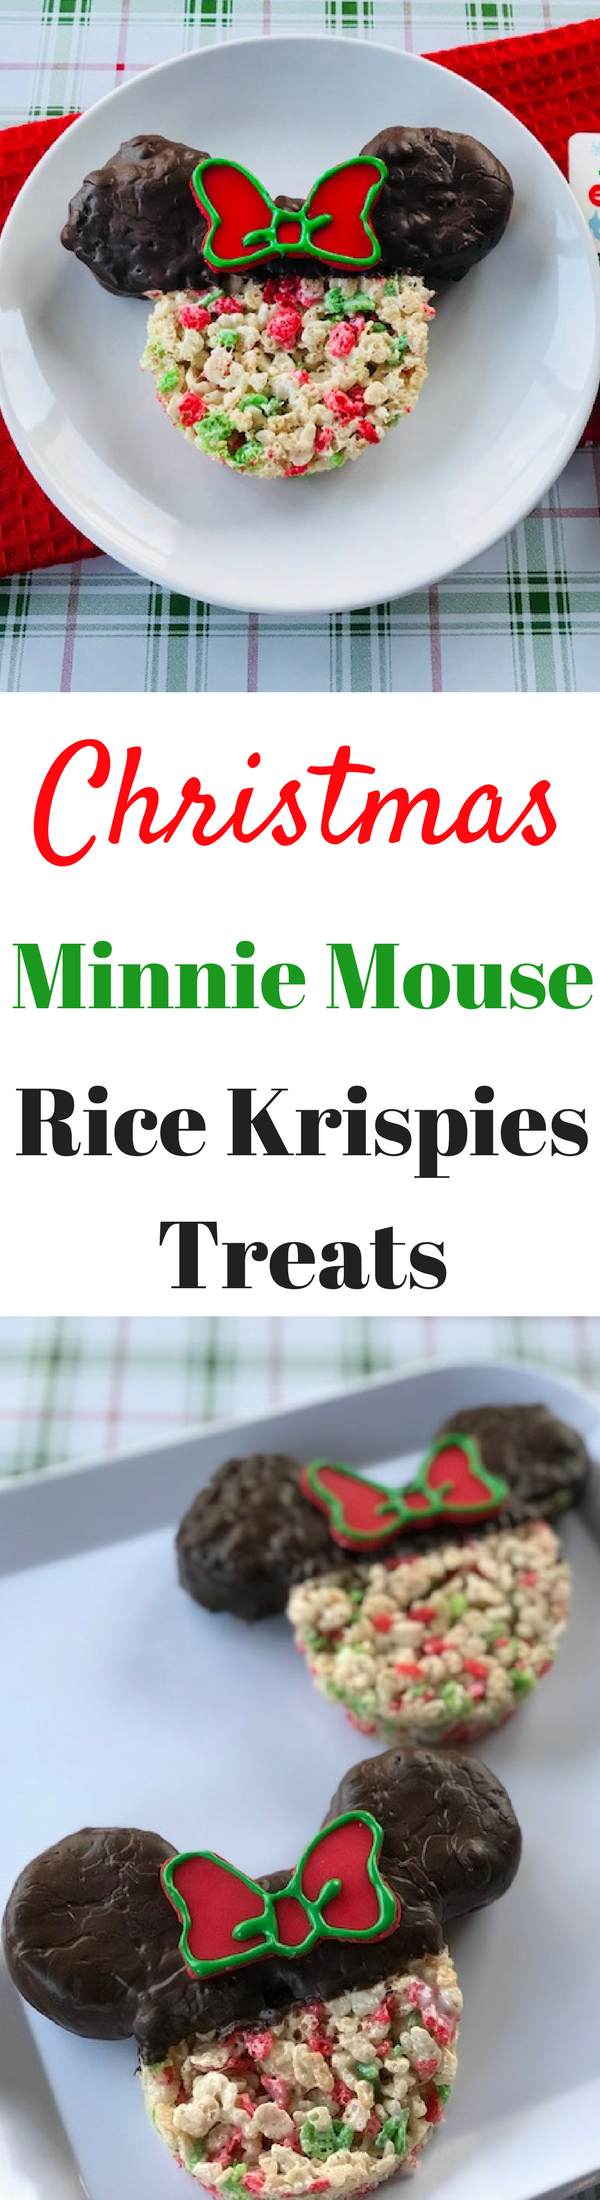 Minnie Mouse Rice Krispies Treats, Christmas Treat, Disney Christmas Treat, Rice Krispies Treat, Holiday Baking Idea, Minnie Rice Krispies